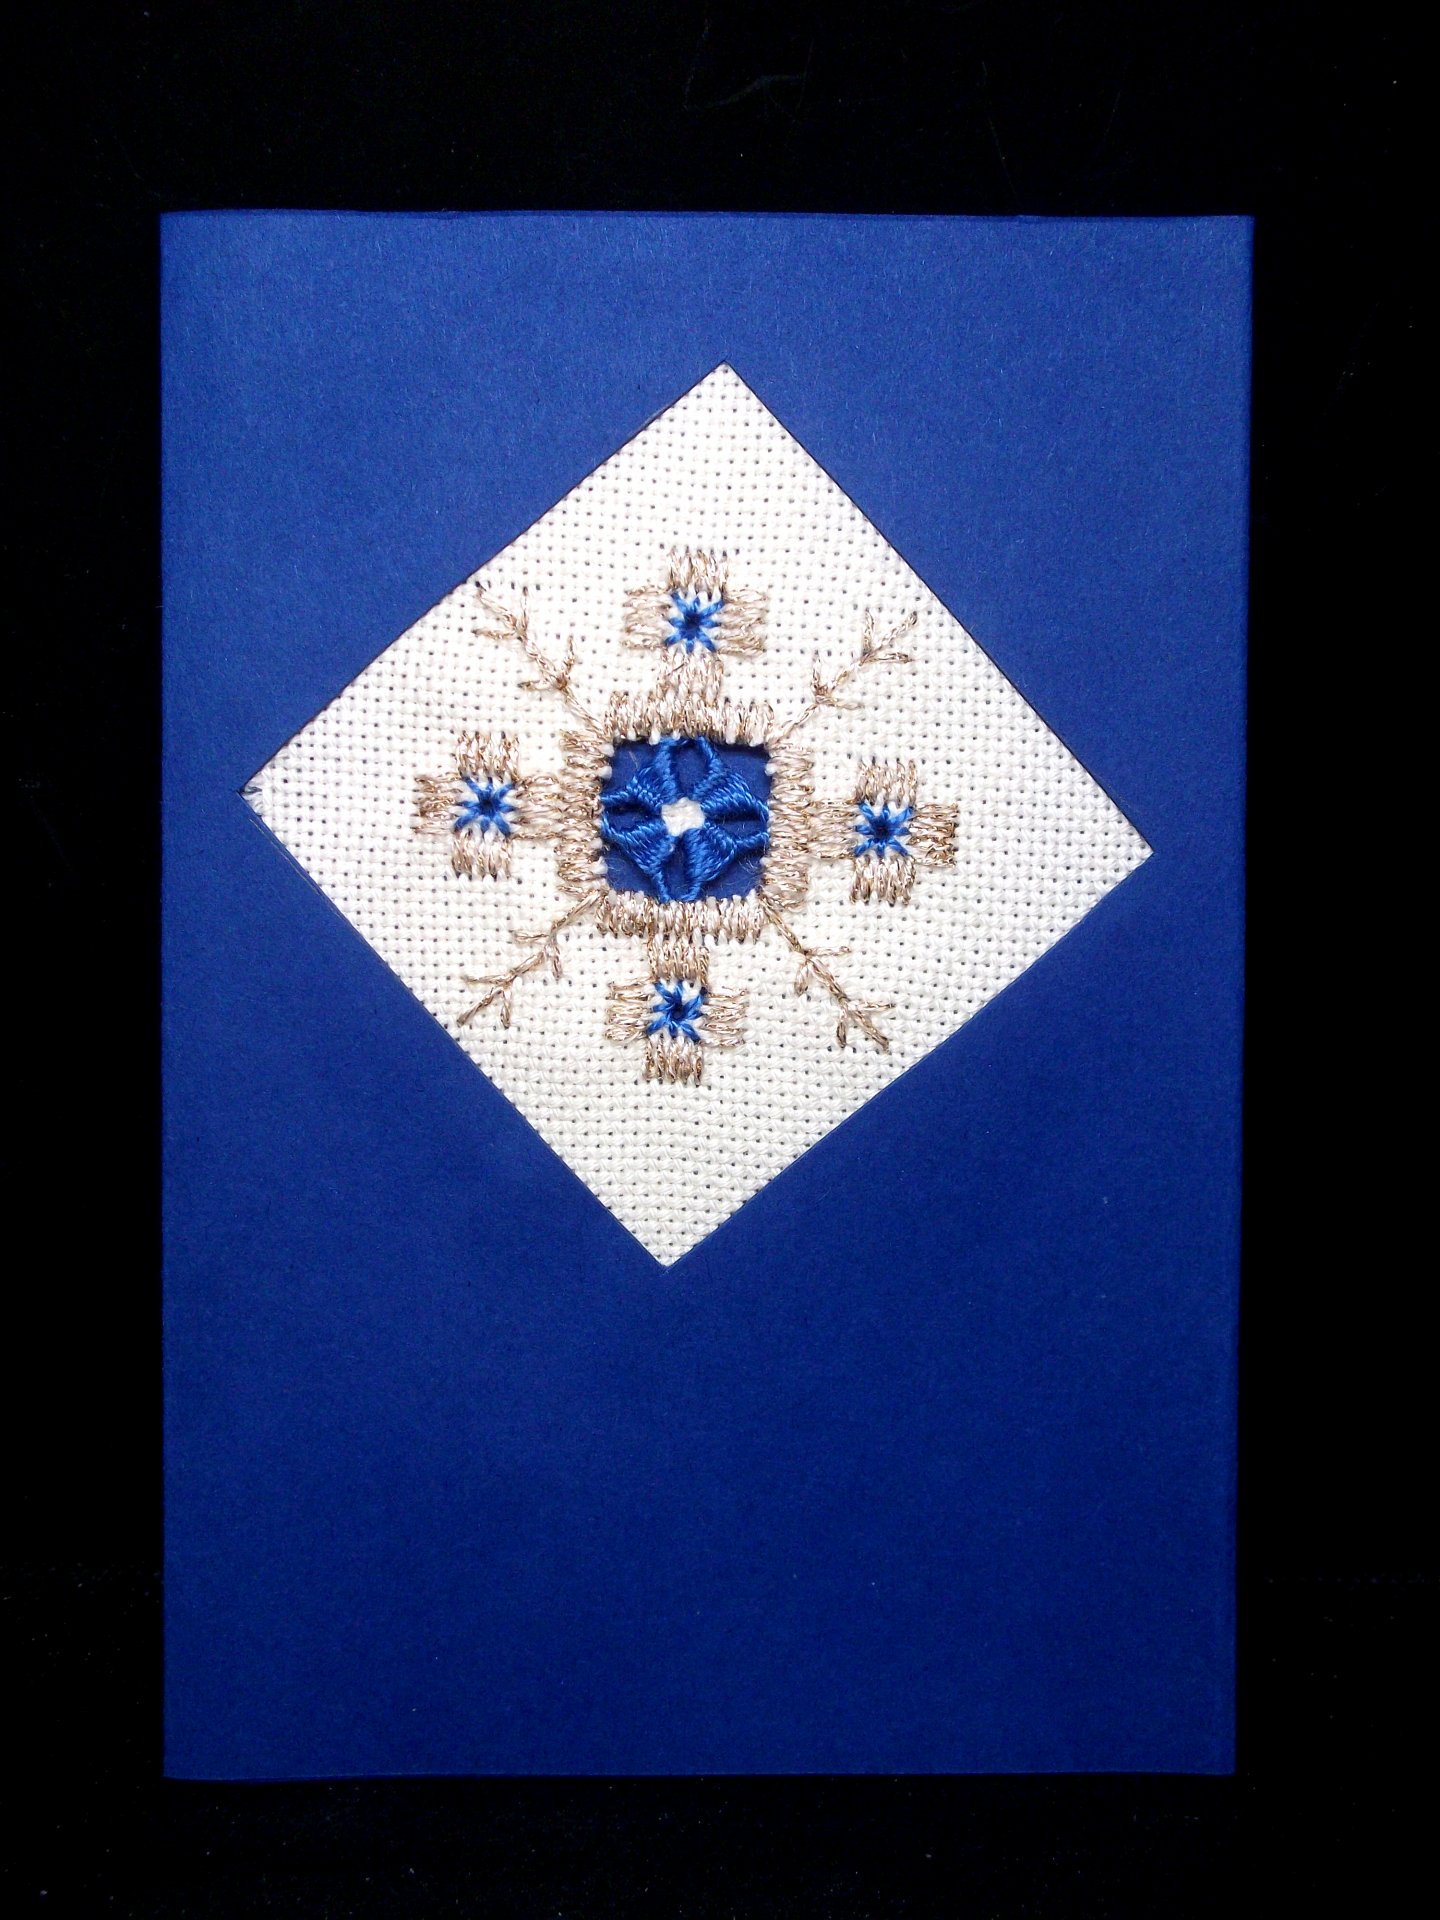 Glückwunschkarte blau mit Malteserkreuz.JPG